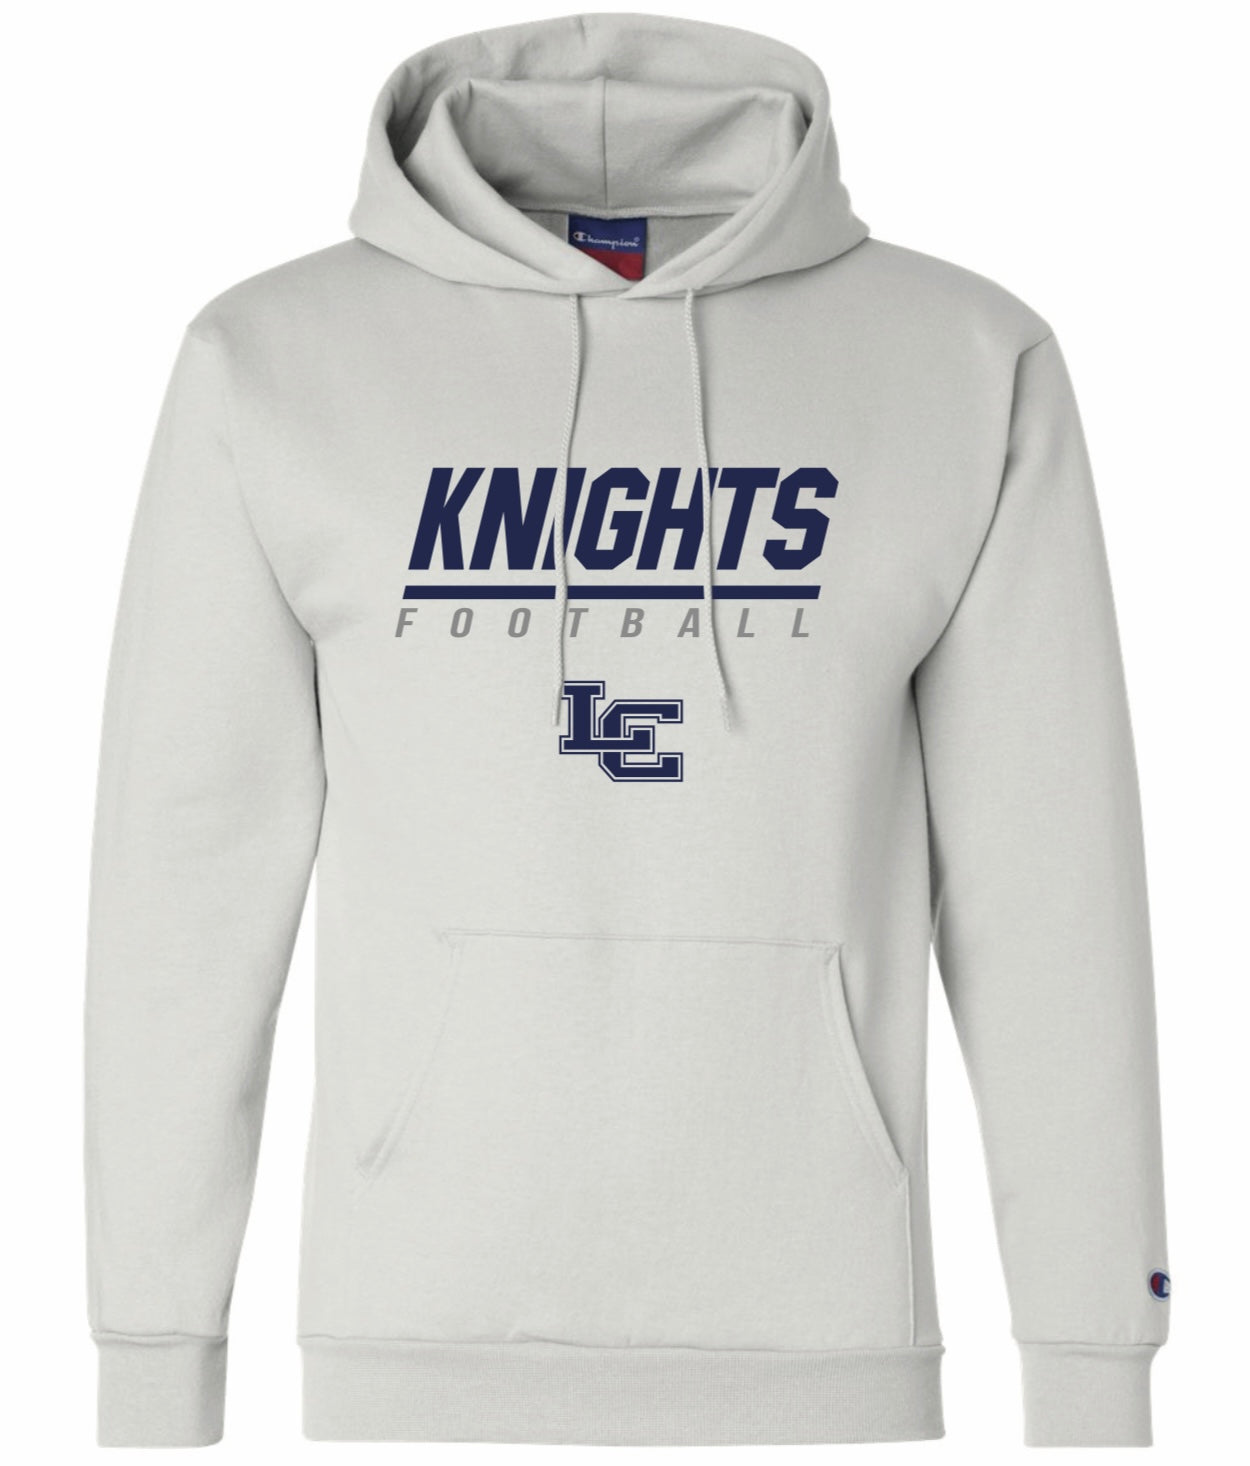 Knights Football - YOUTH Champion Powerblend Hooded Sweatshirt - White